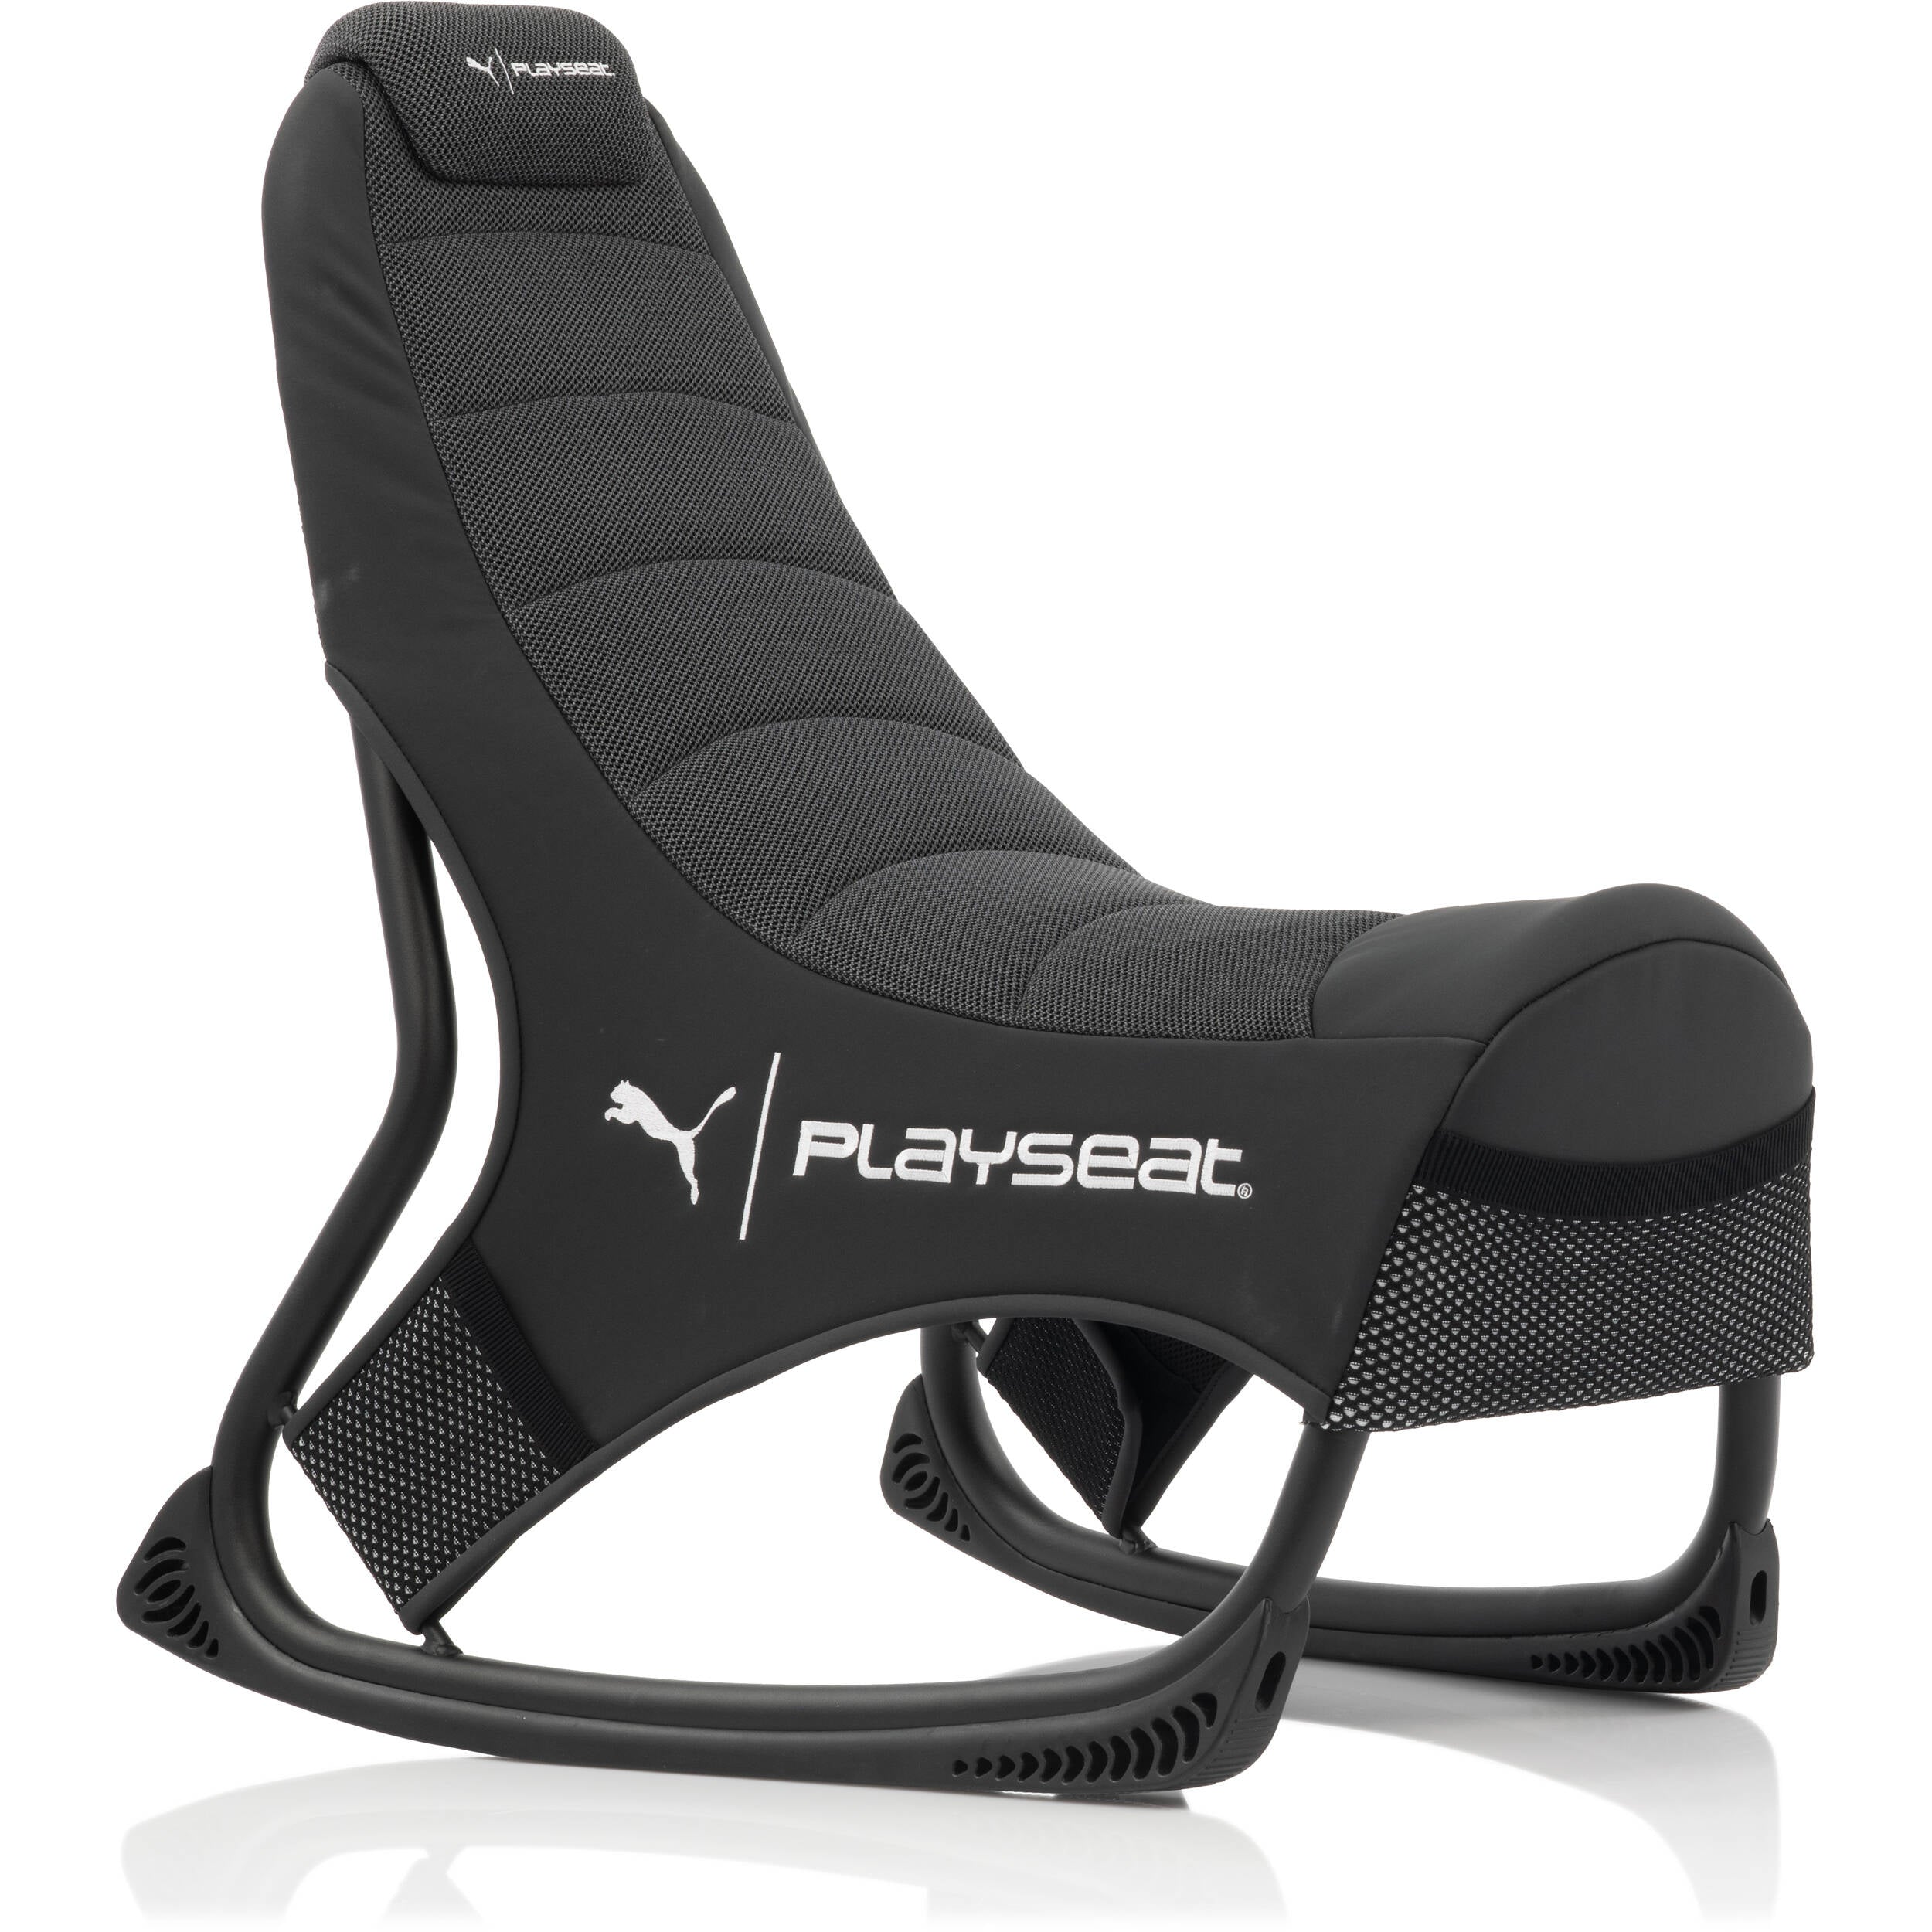 Playseat PPG.00228 PUMA Active Gaming Seat Black